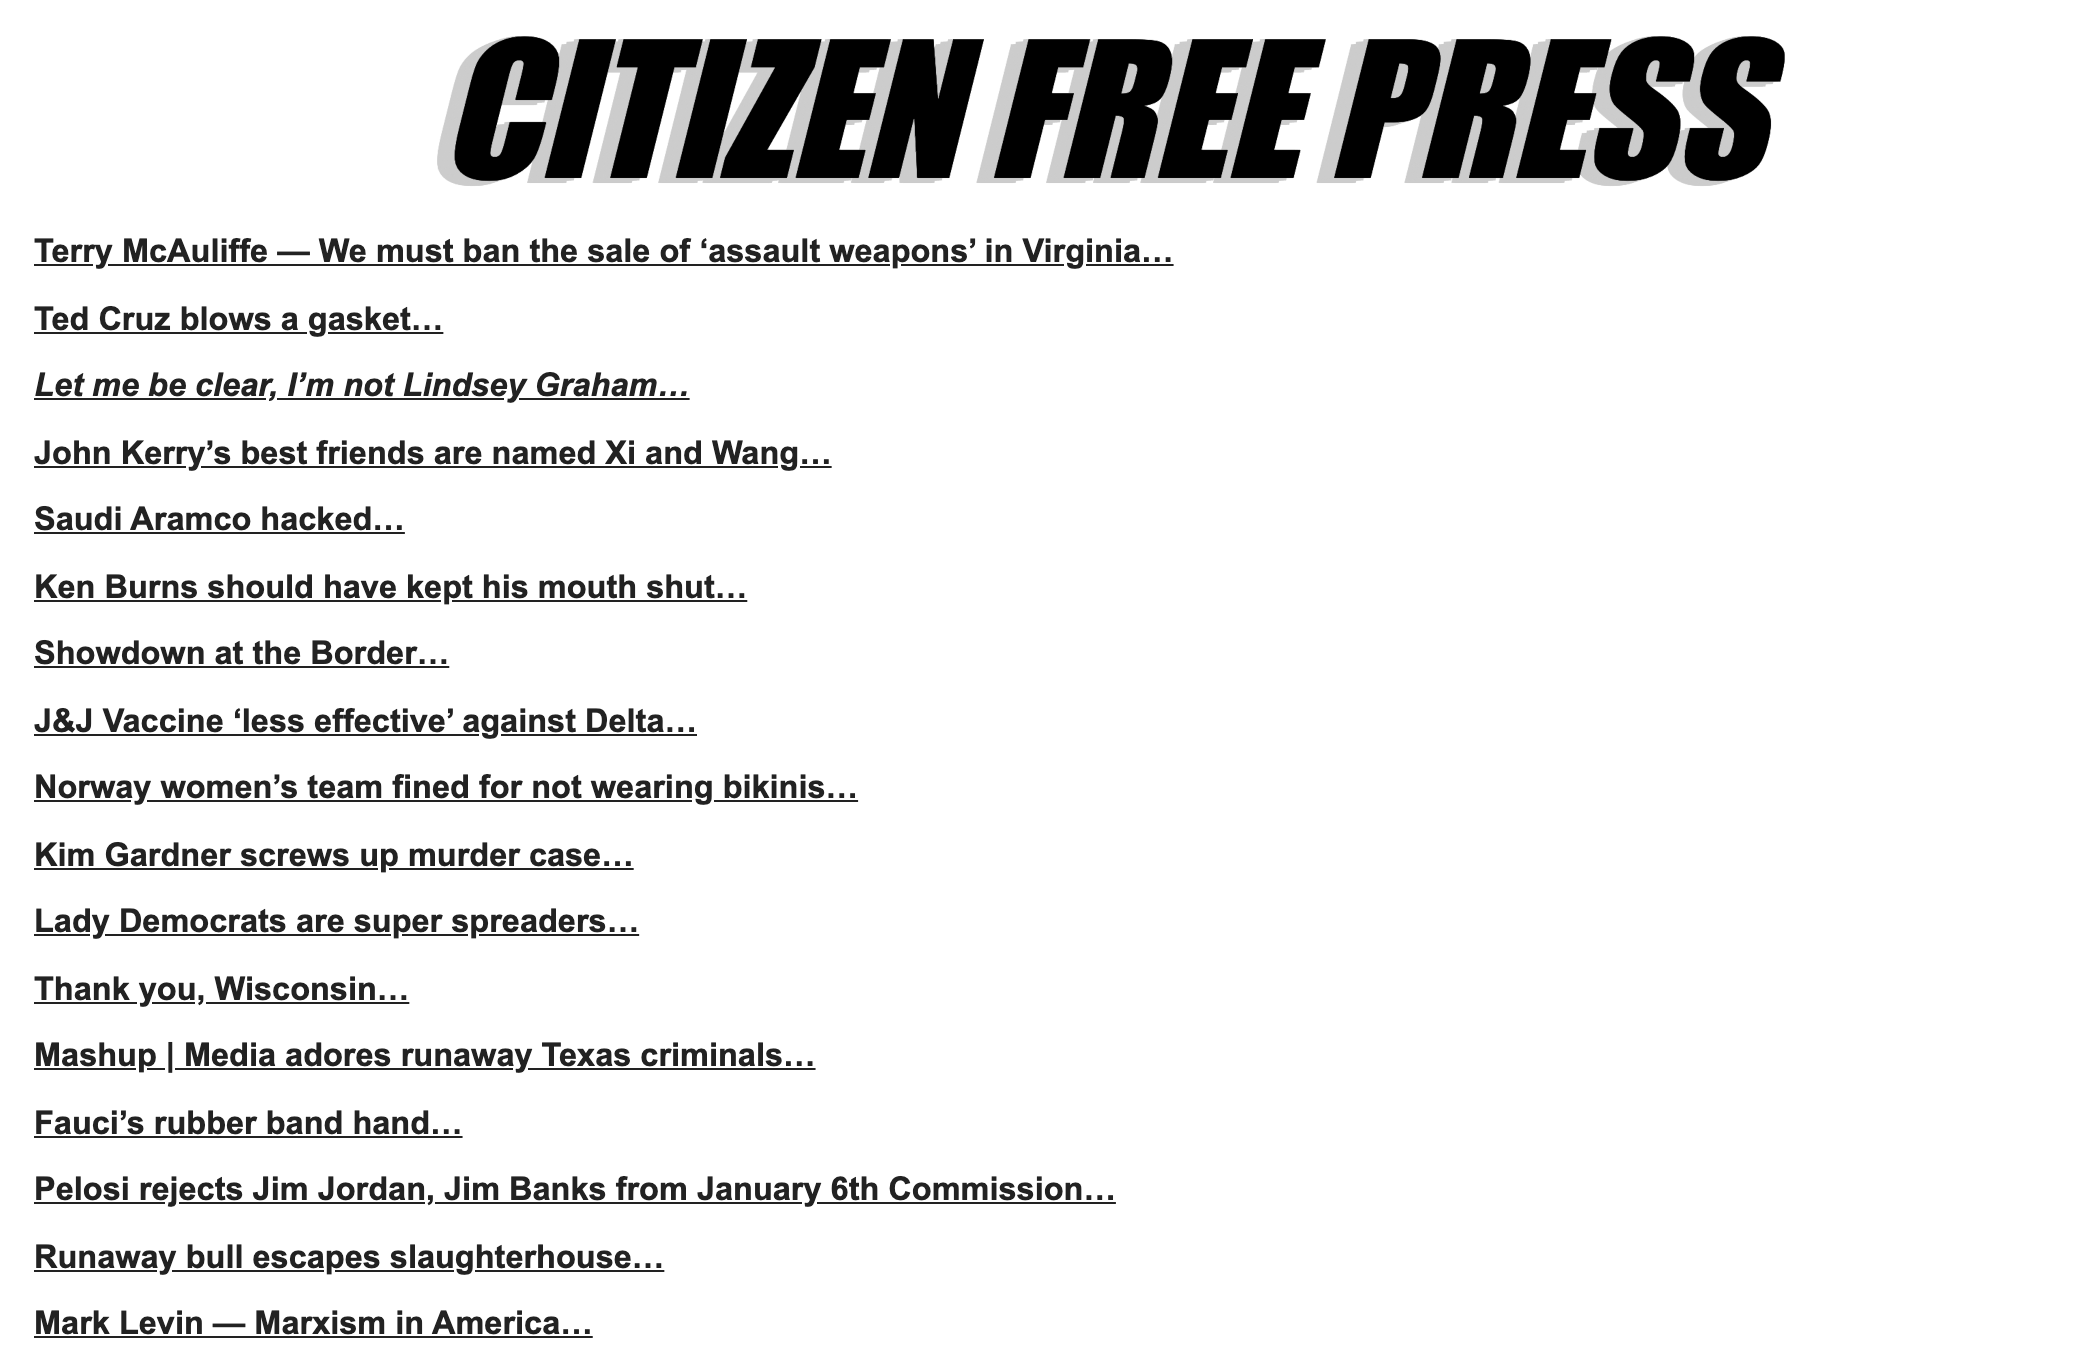 Citizen Free Press